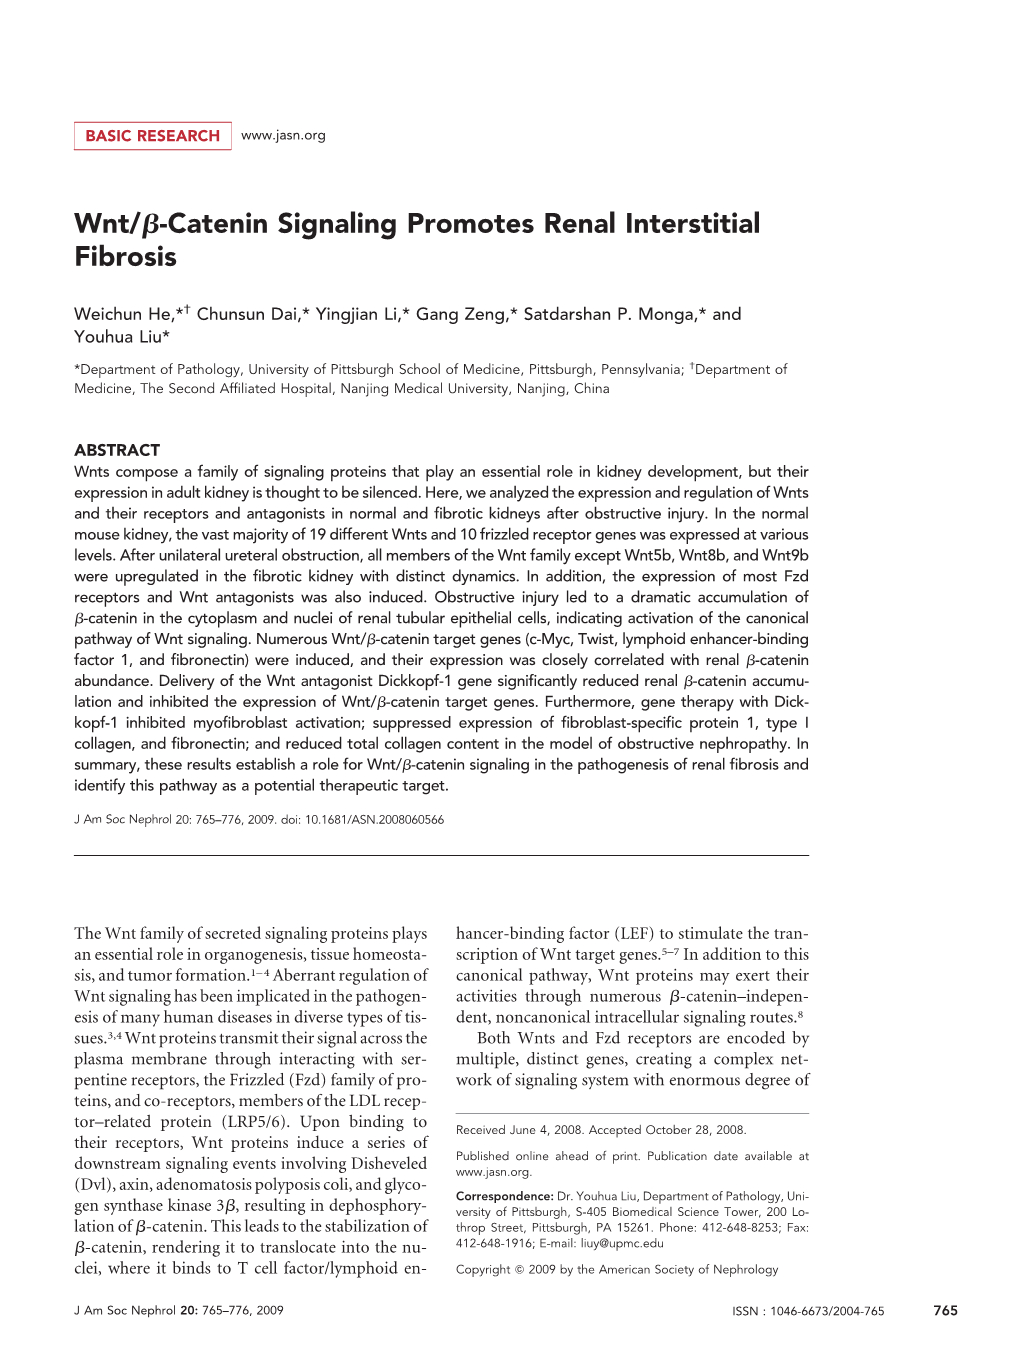 Wnt/-Catenin Signaling Promotes Renal Interstitial Fibrosis